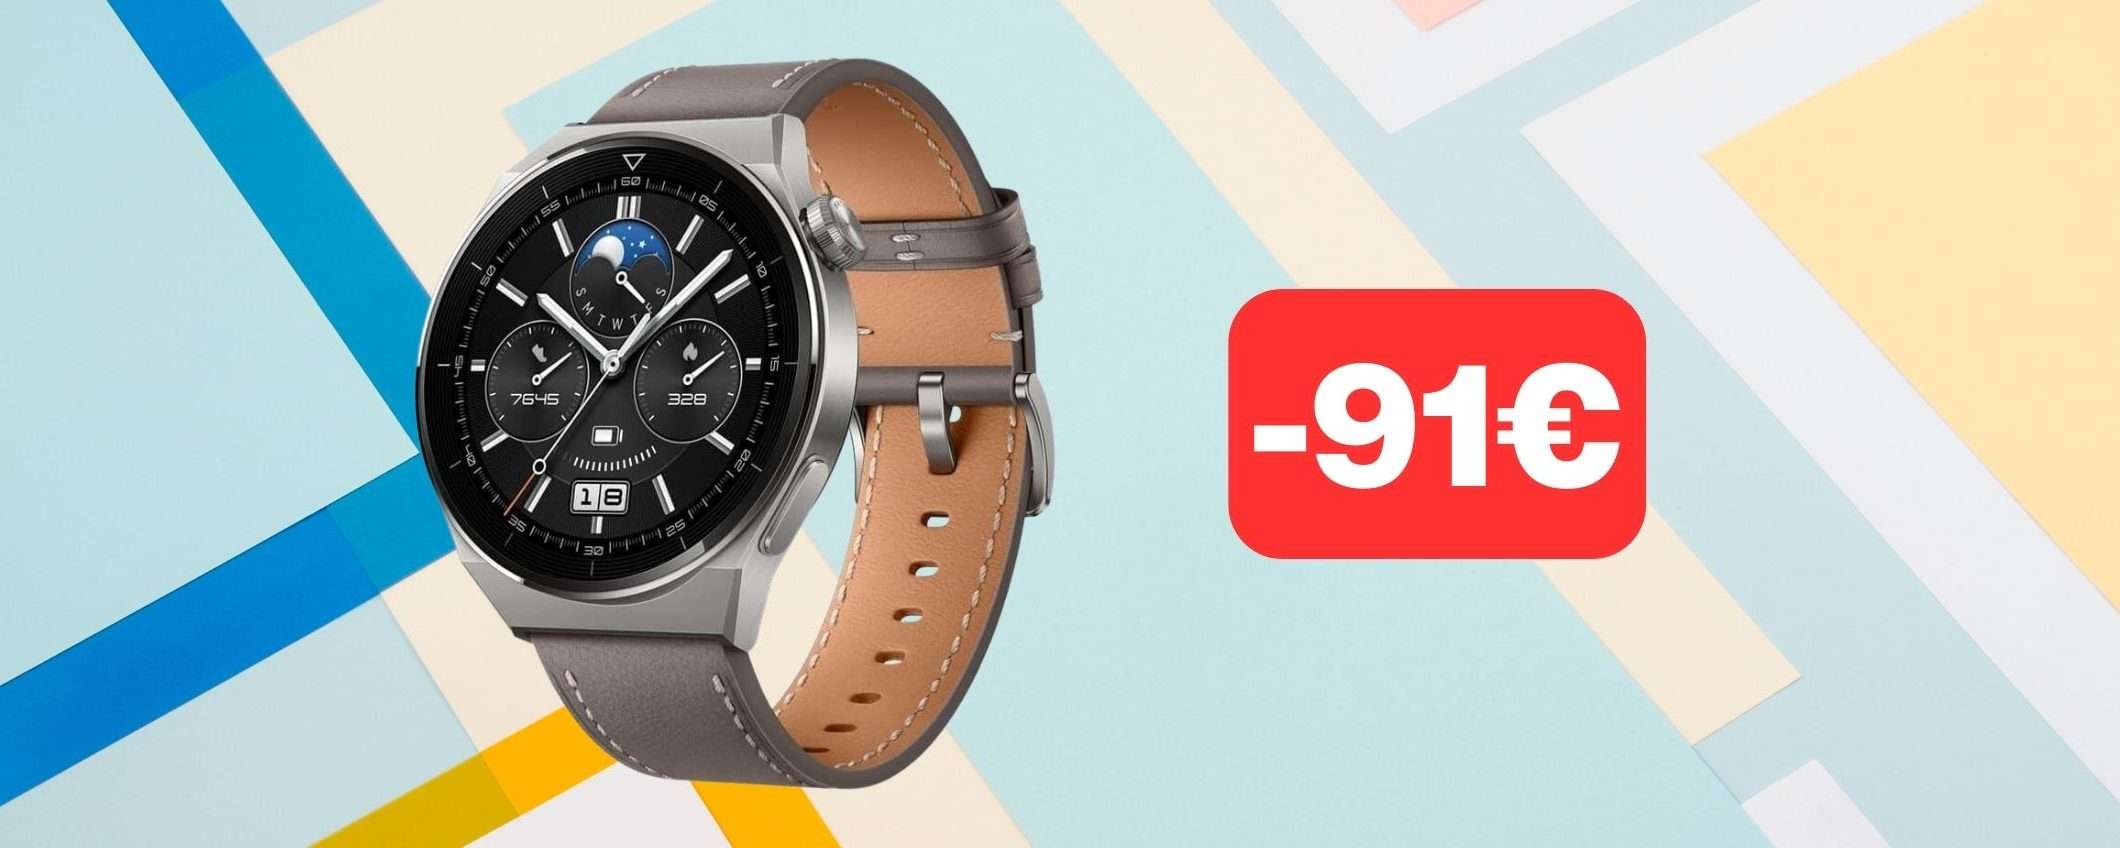 Huawei Watch GT3: smartwatch elegante in OTTIMO SCONTO su Amazon (-95€)